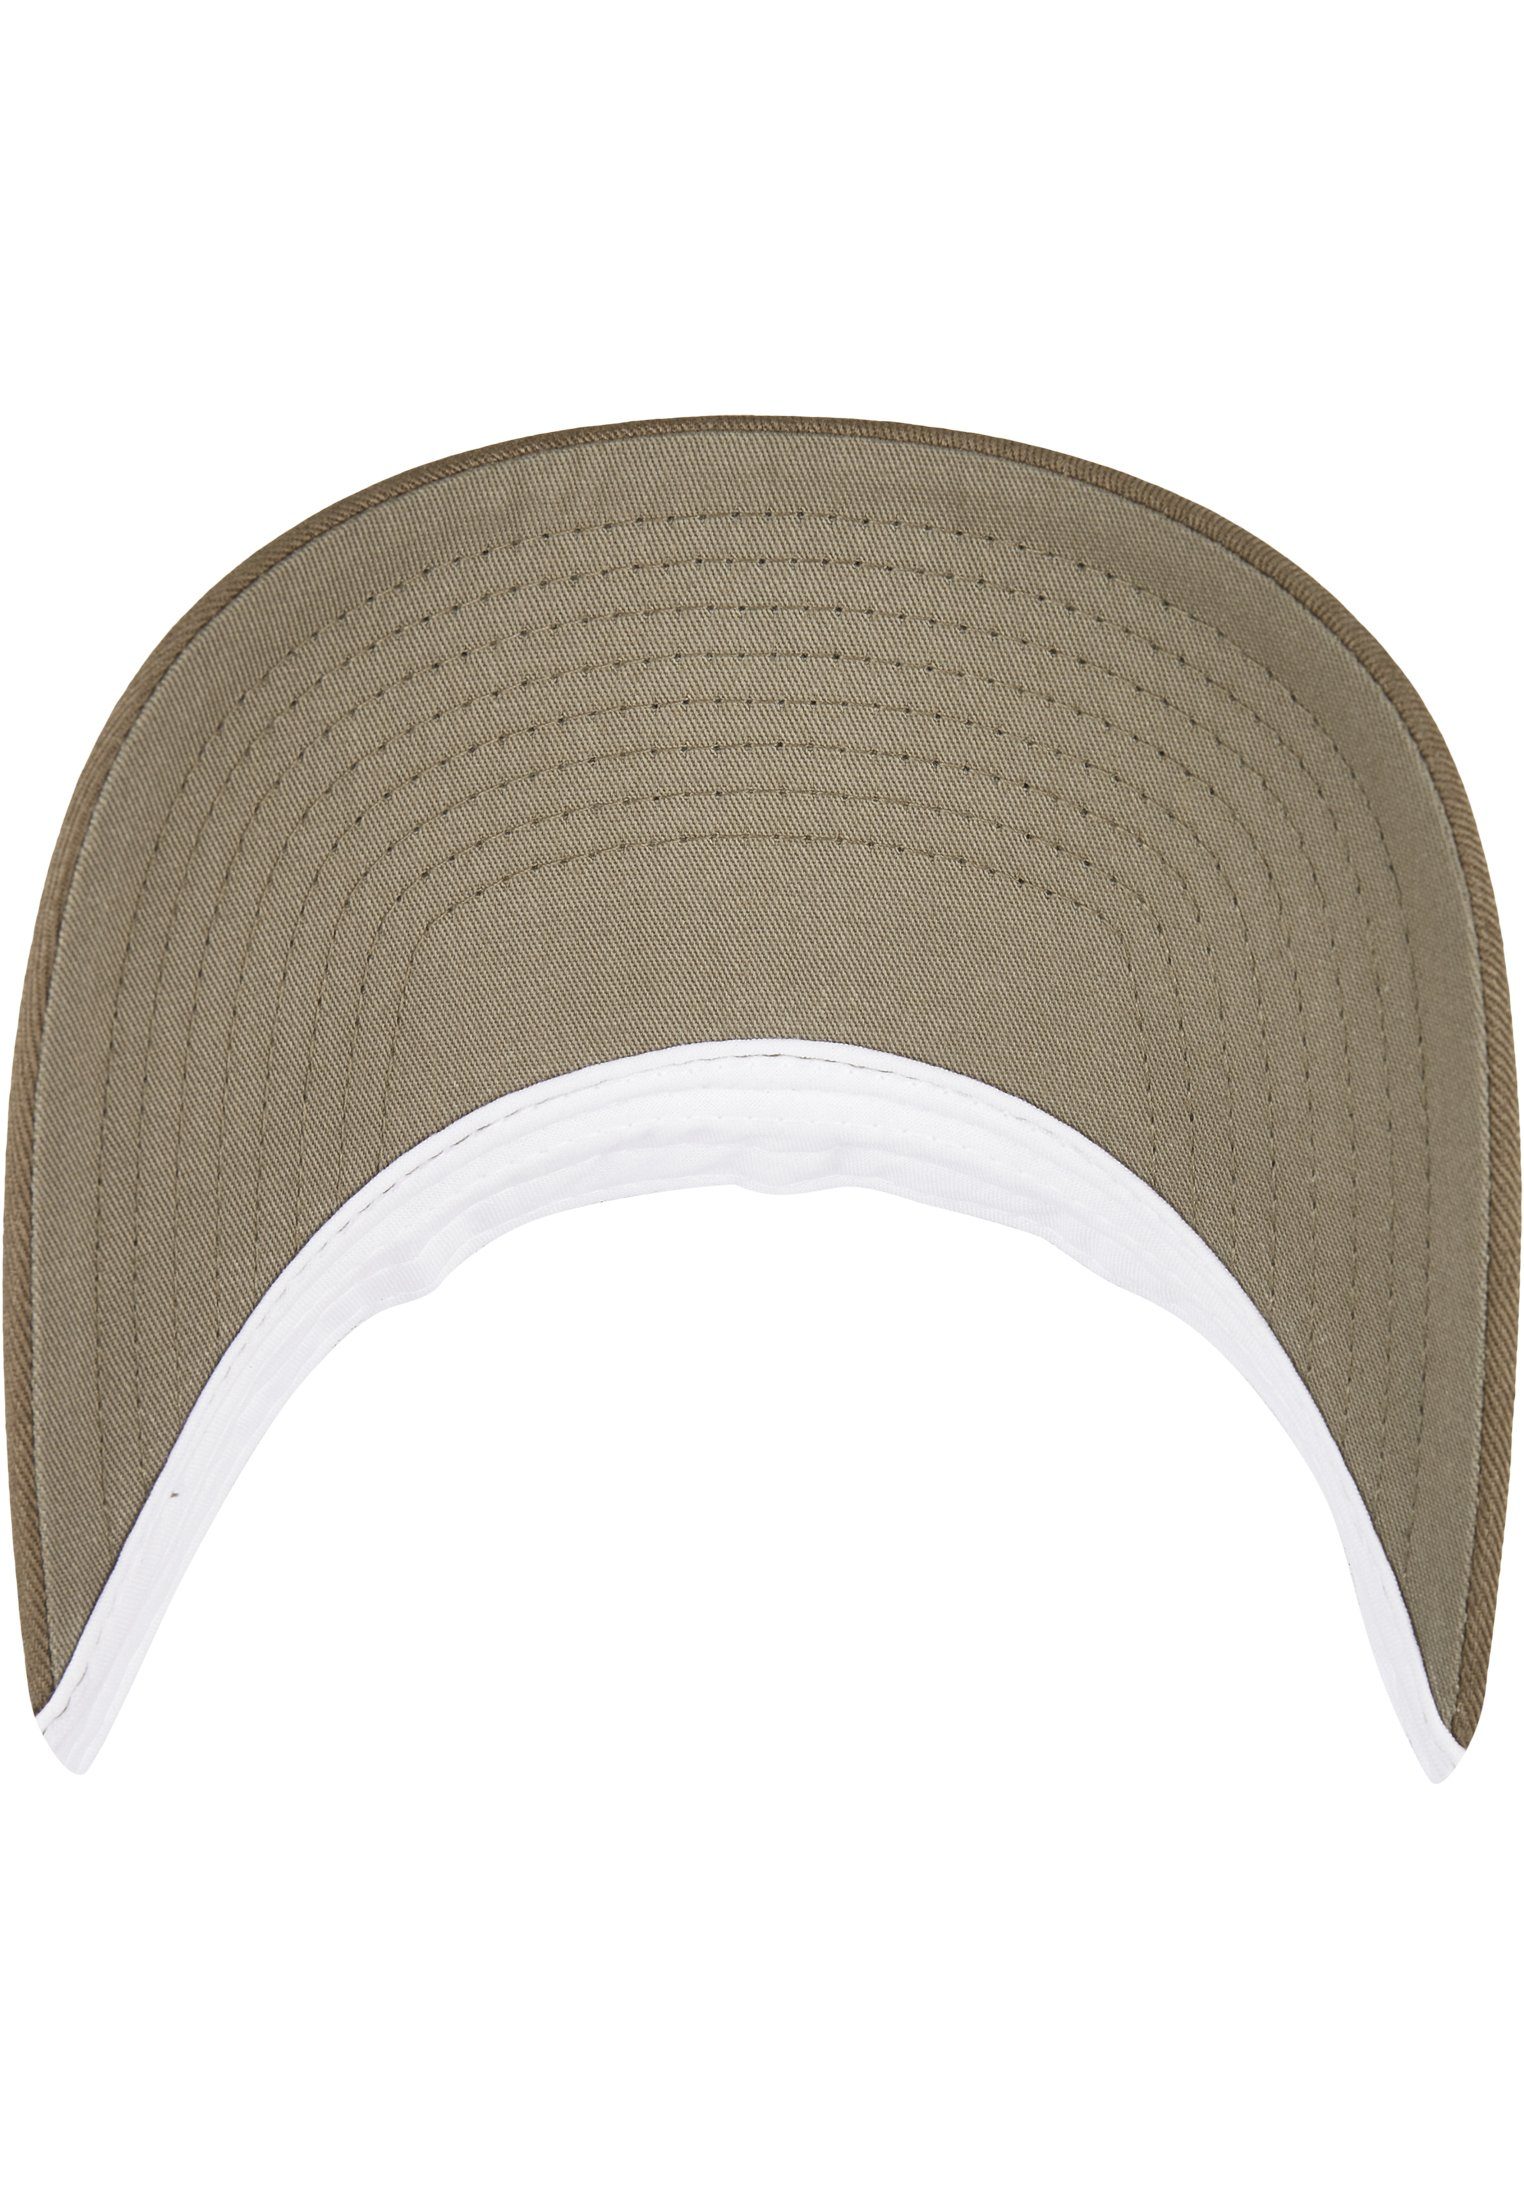 Flexfit Flex Cap Caps CAP CLASSICS YP olive/white RETRO 2-TONE RECYCLED TRUCKER